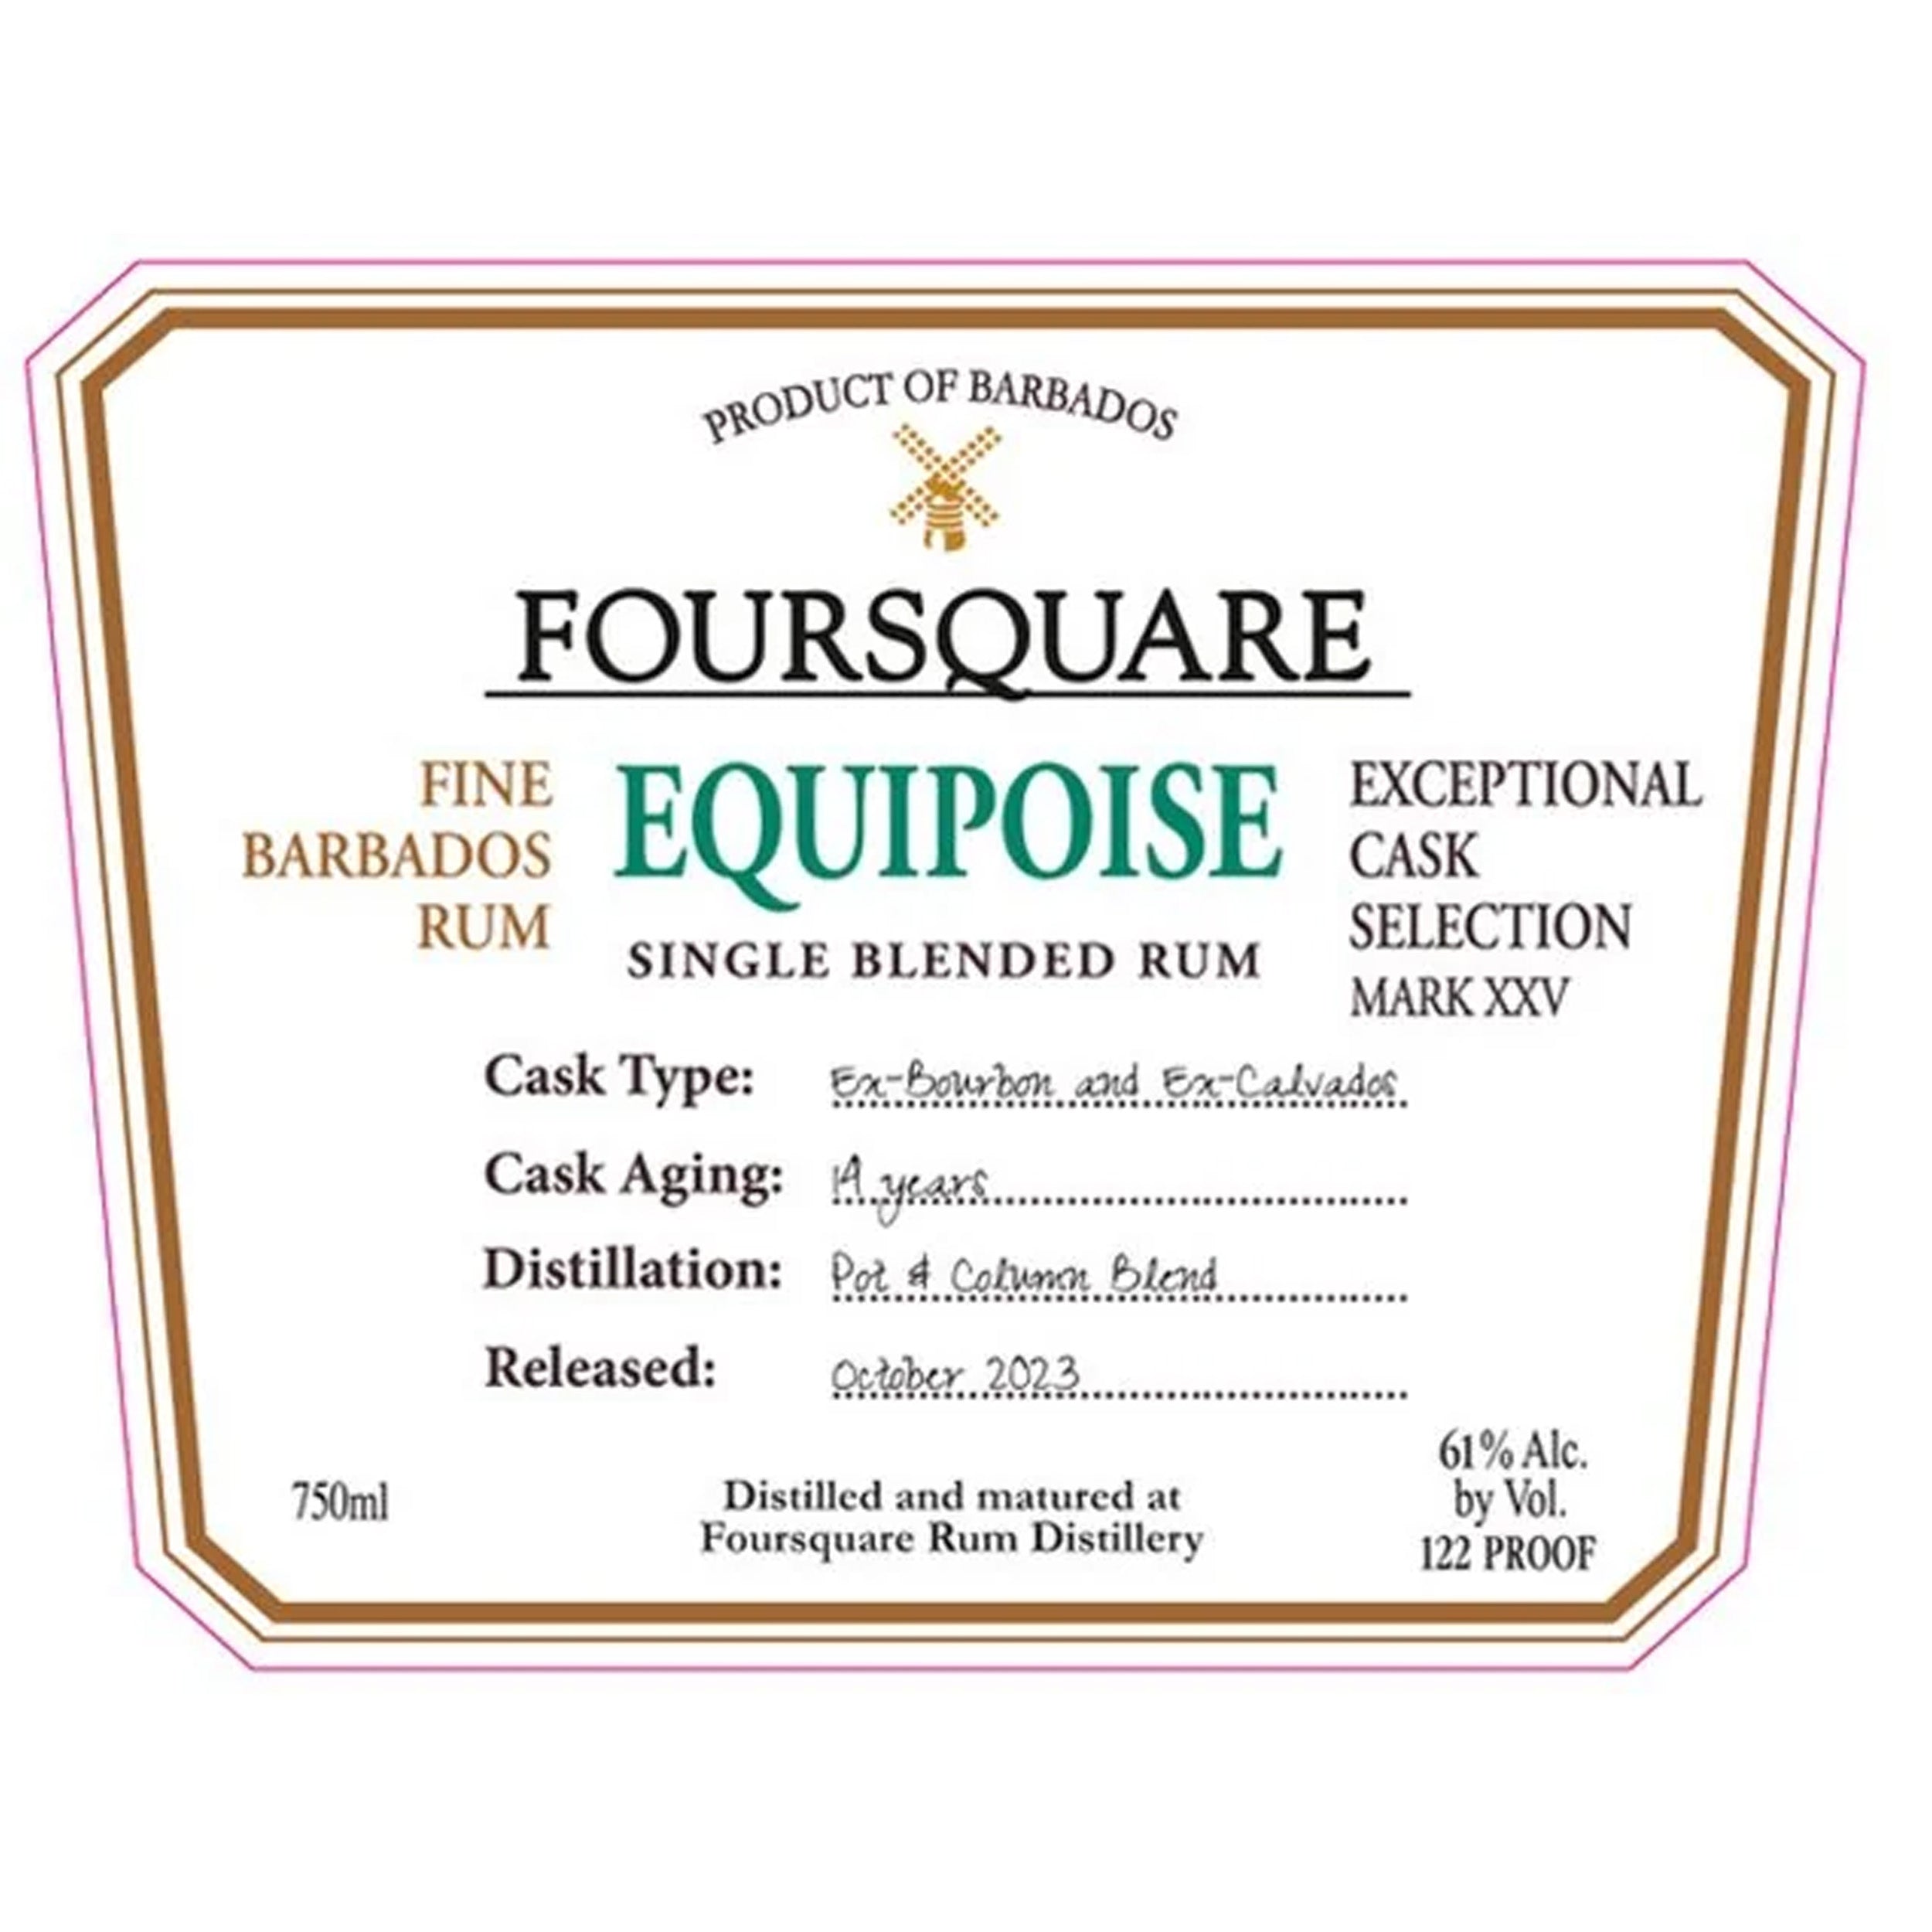 Foursquare Equipoise 14 Year Rum